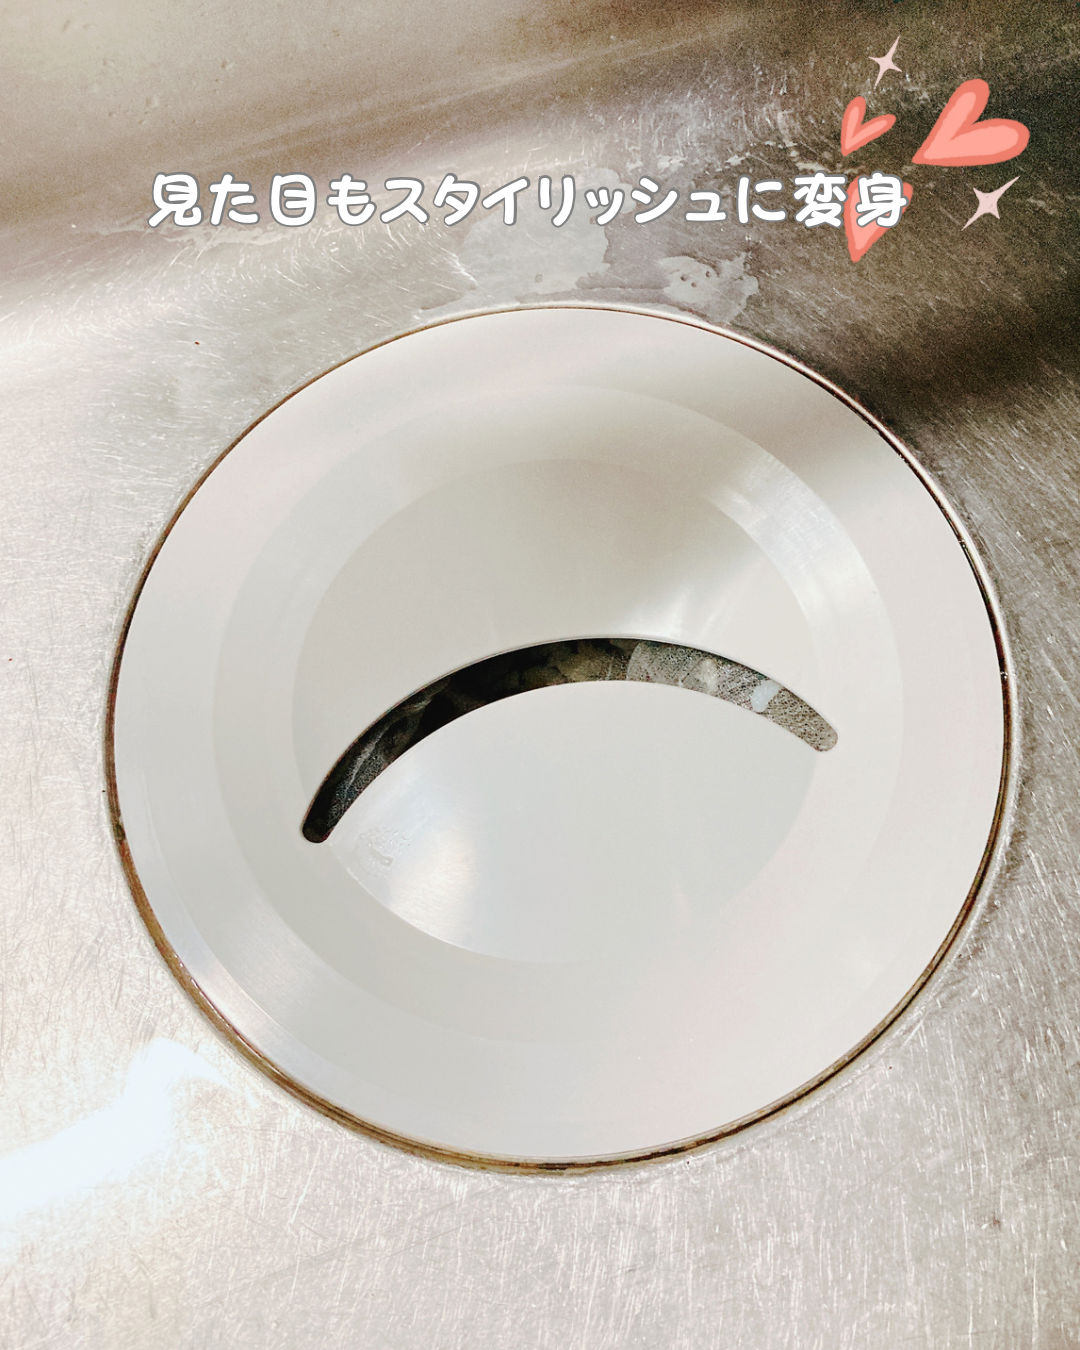 HAISUIKO キッチン排水口ゴミ受けネット取り付けプレート 防臭ふたセットの良い点・メリットに関する木戸咲夜さんの口コミ画像3